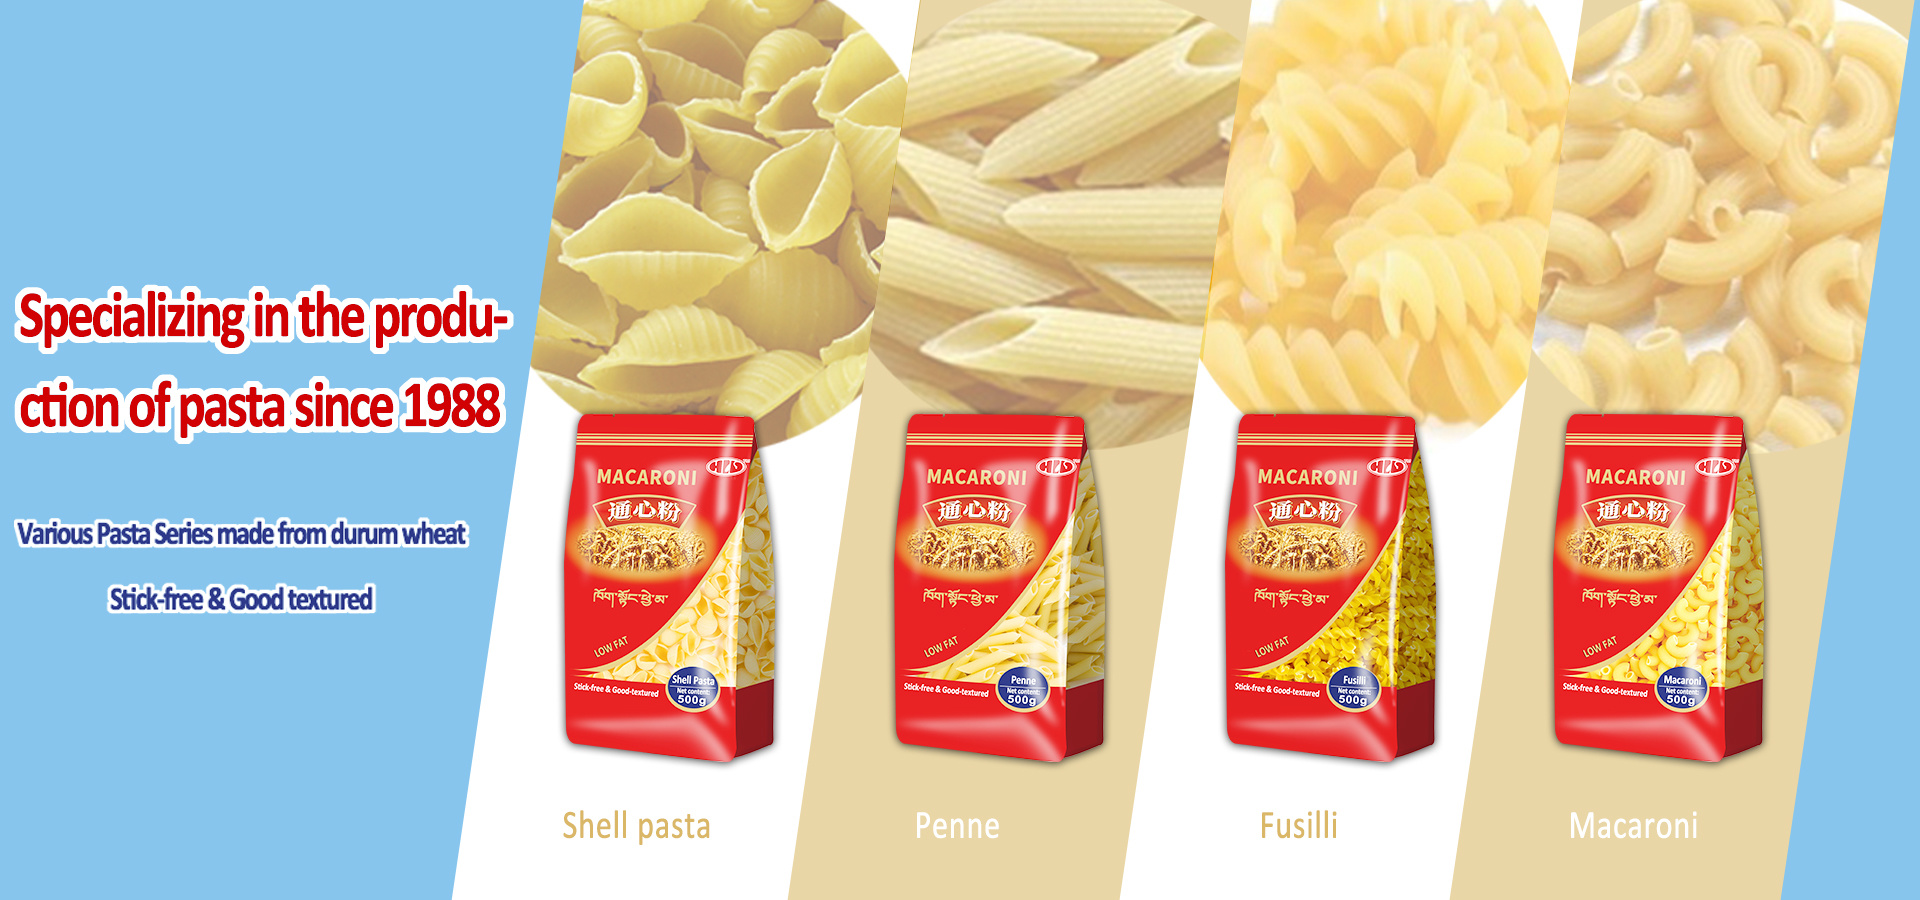 Various Pasta Series made from durum wheat